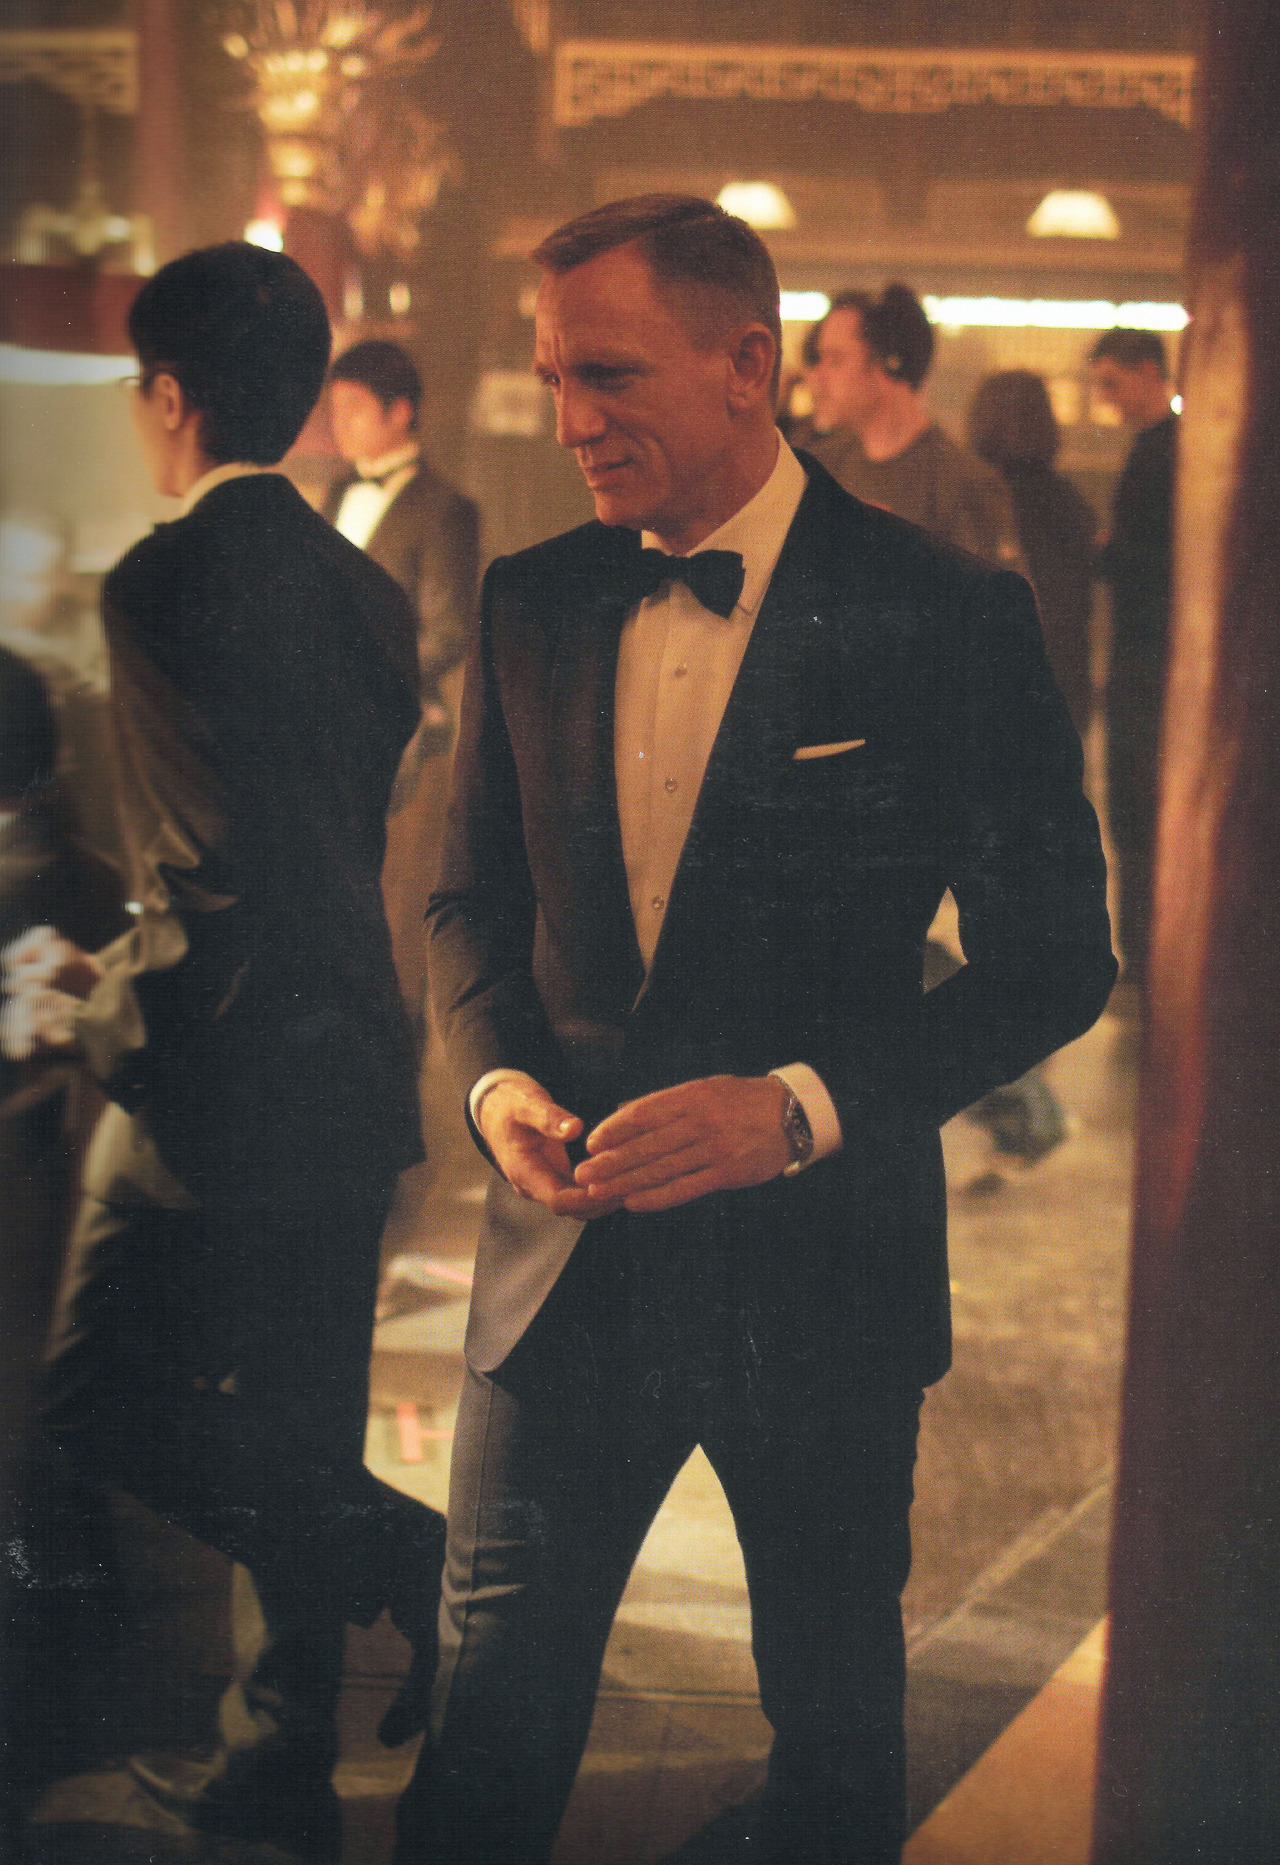  Bond, James Bond. 